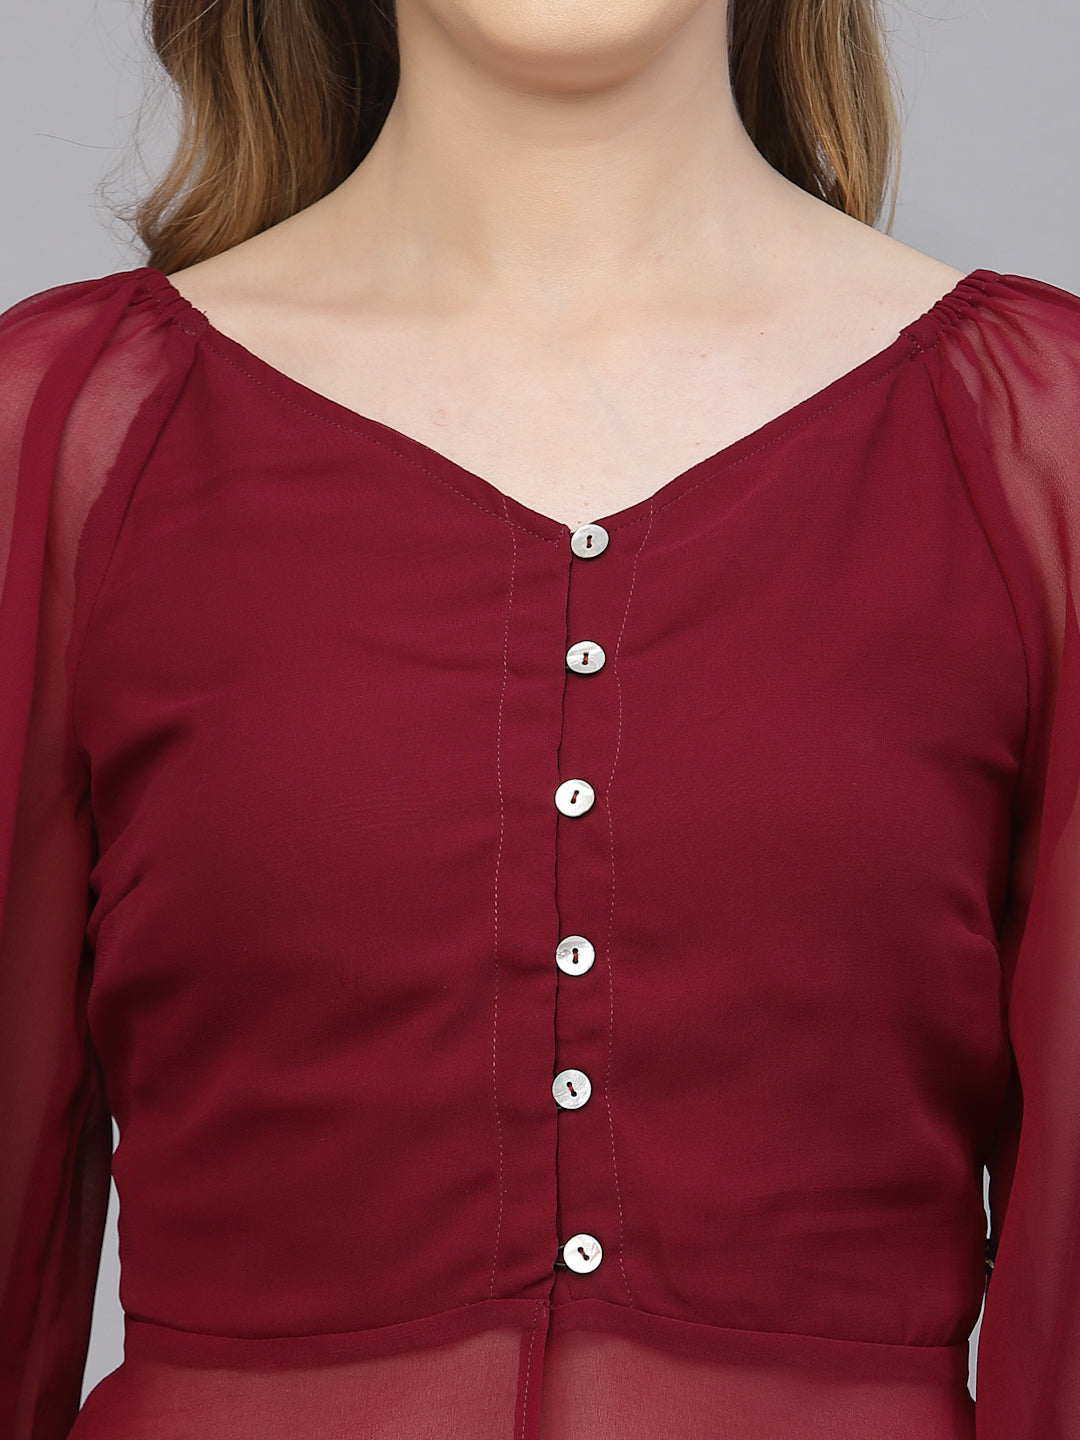 Valbone Women's Maroon Georgette Button Closure Top 3/4-Sleeves